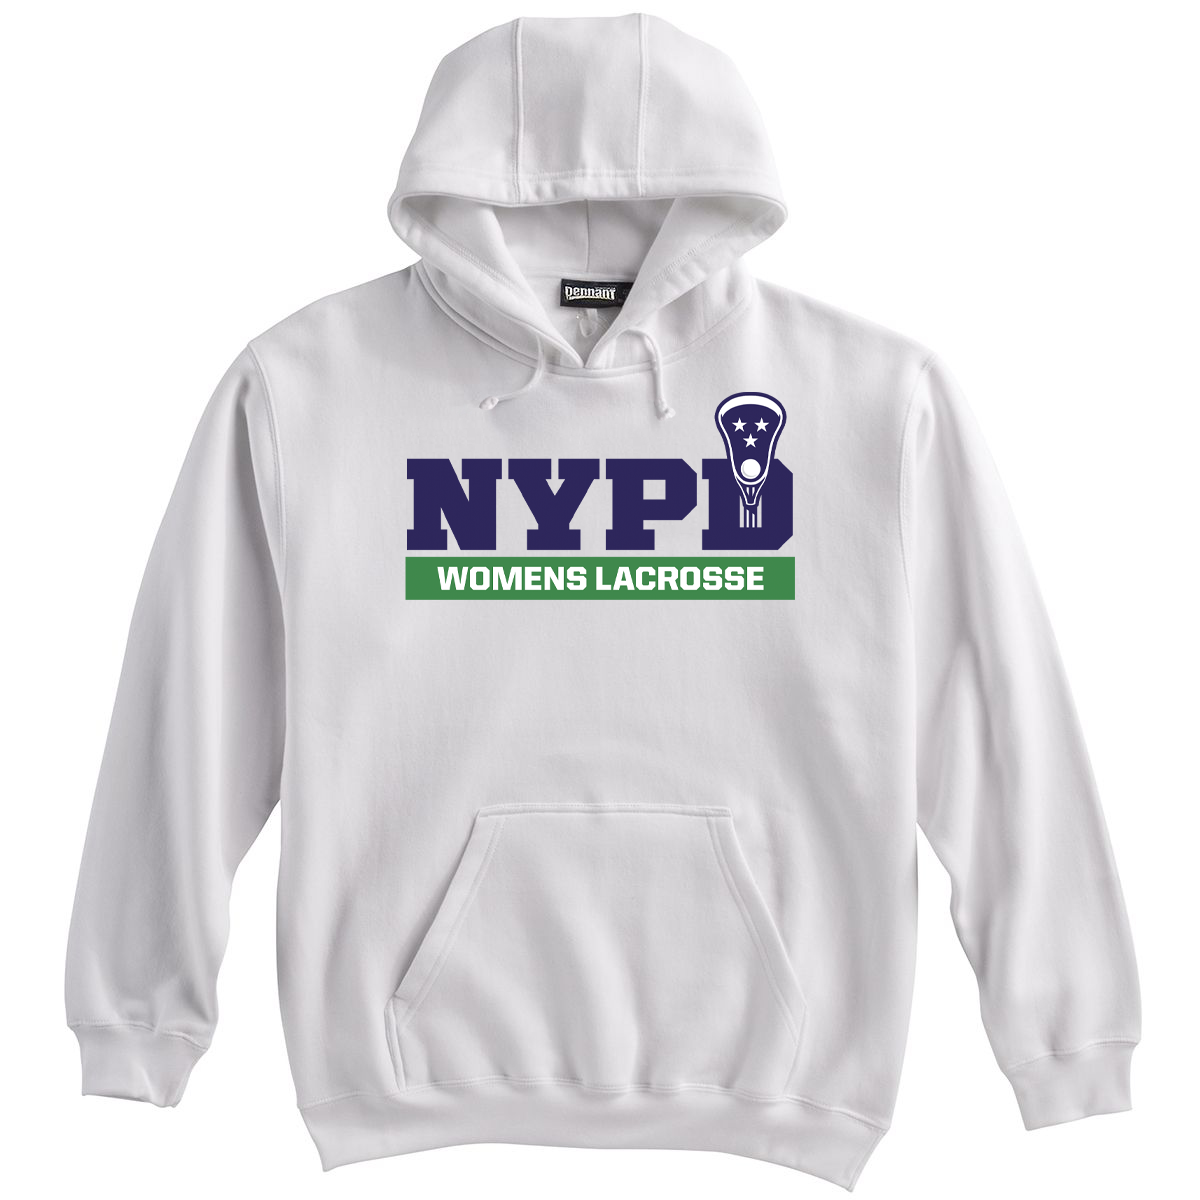 NYPD Womens Lacrosse Sweatshirt